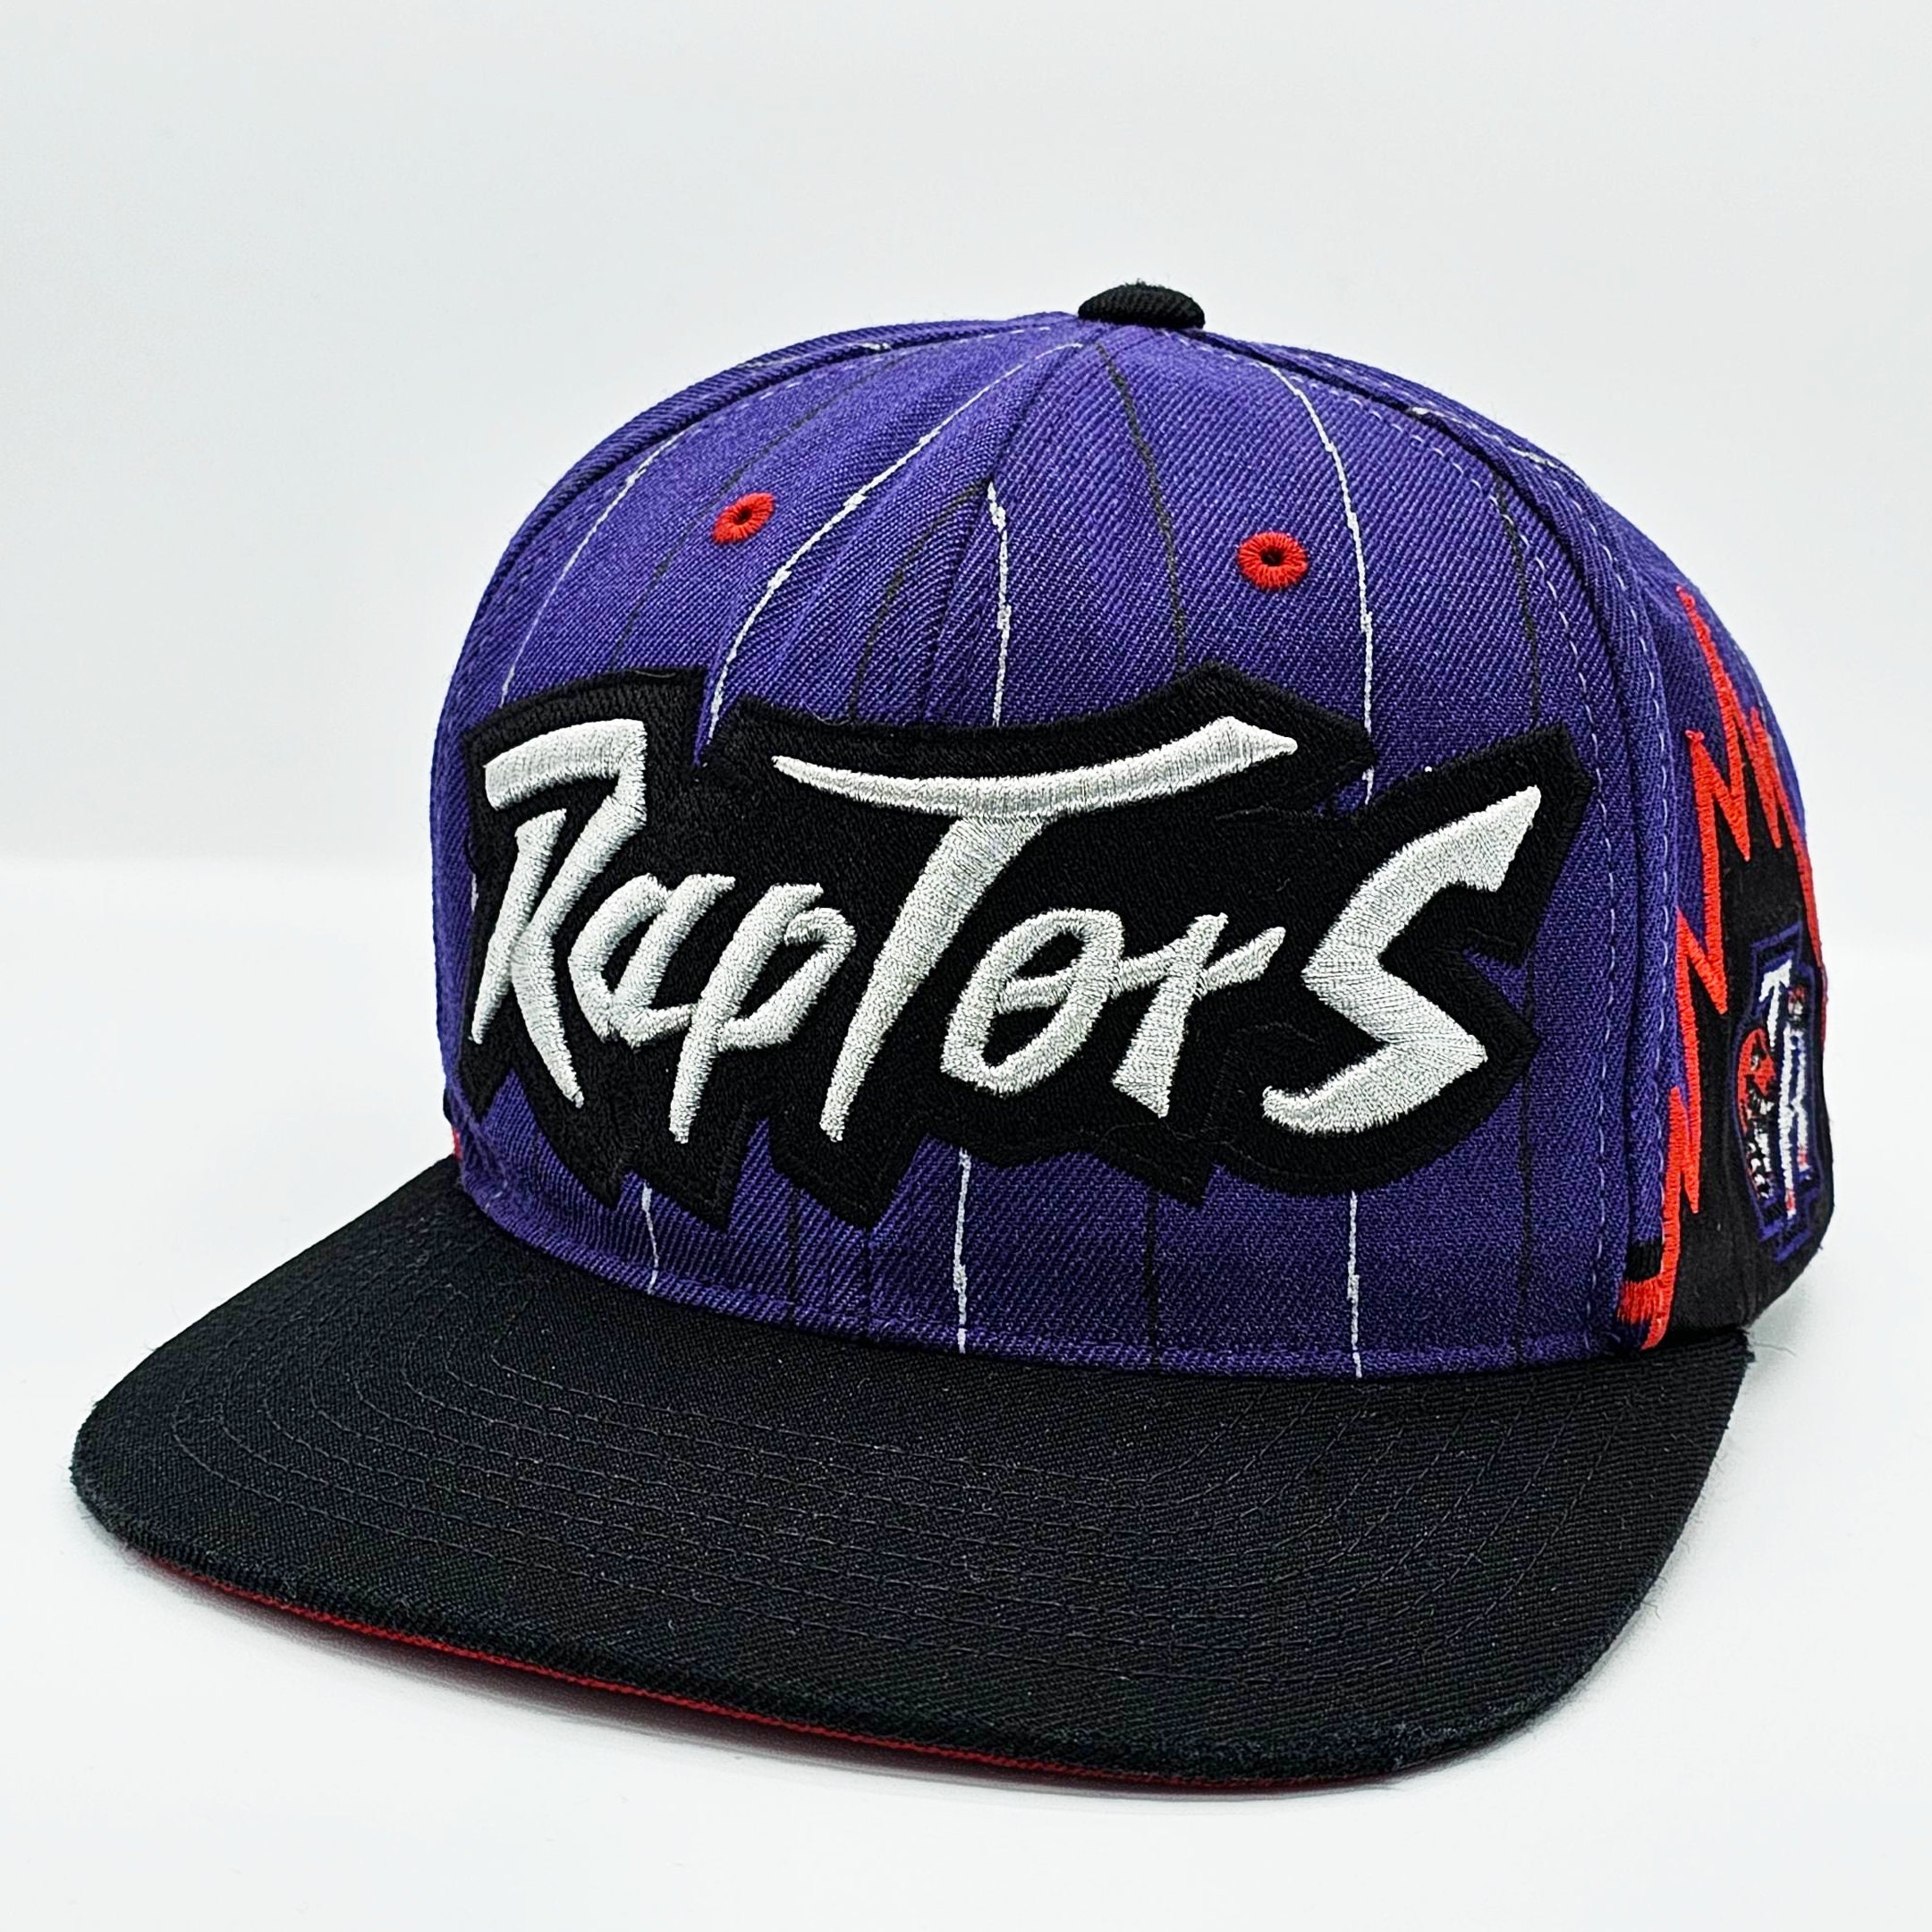 vintage sports specialties NBA Toronto raptors purple snapback